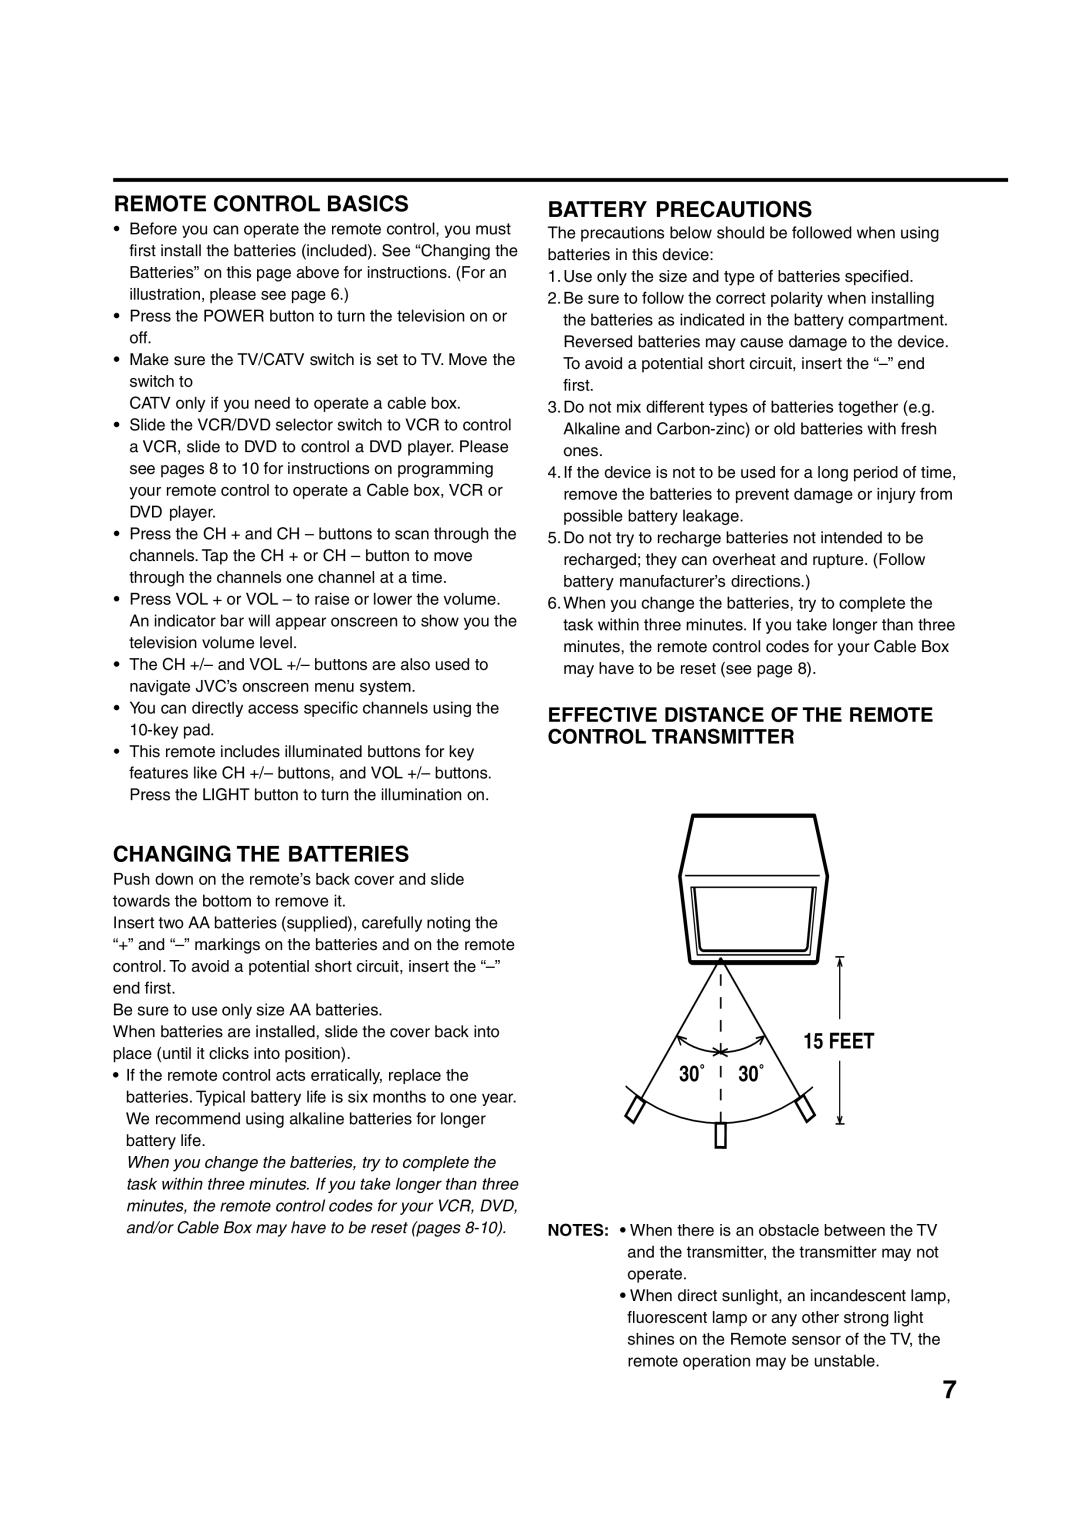 Aiwa AV-14F703 manual Remote Control Basics, Battery Precautions, Changing the Batteries, Feet 